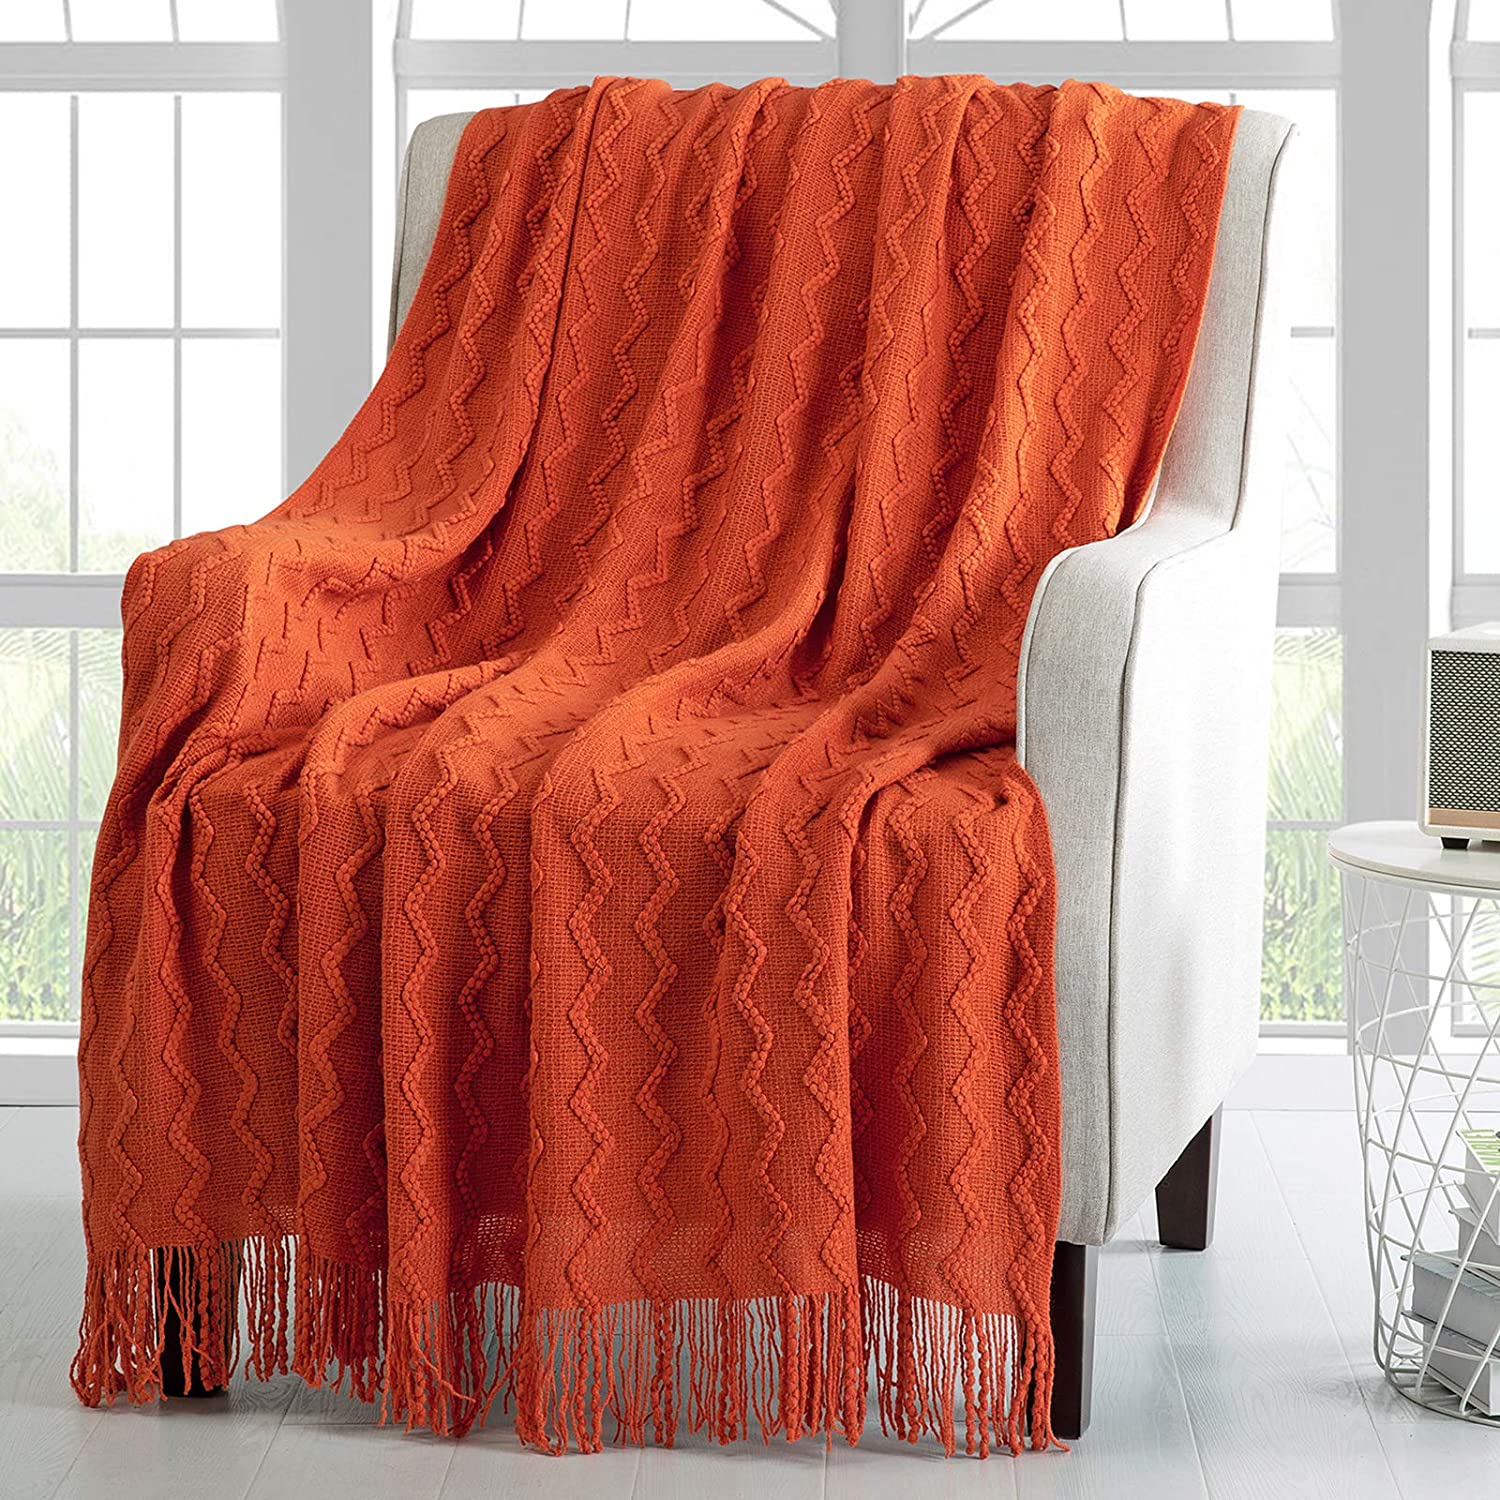 125*200cm Cozy Decorative Knit Woven Throw Blanket Sofa Throw Bed Throw Bed Blanket - Orange